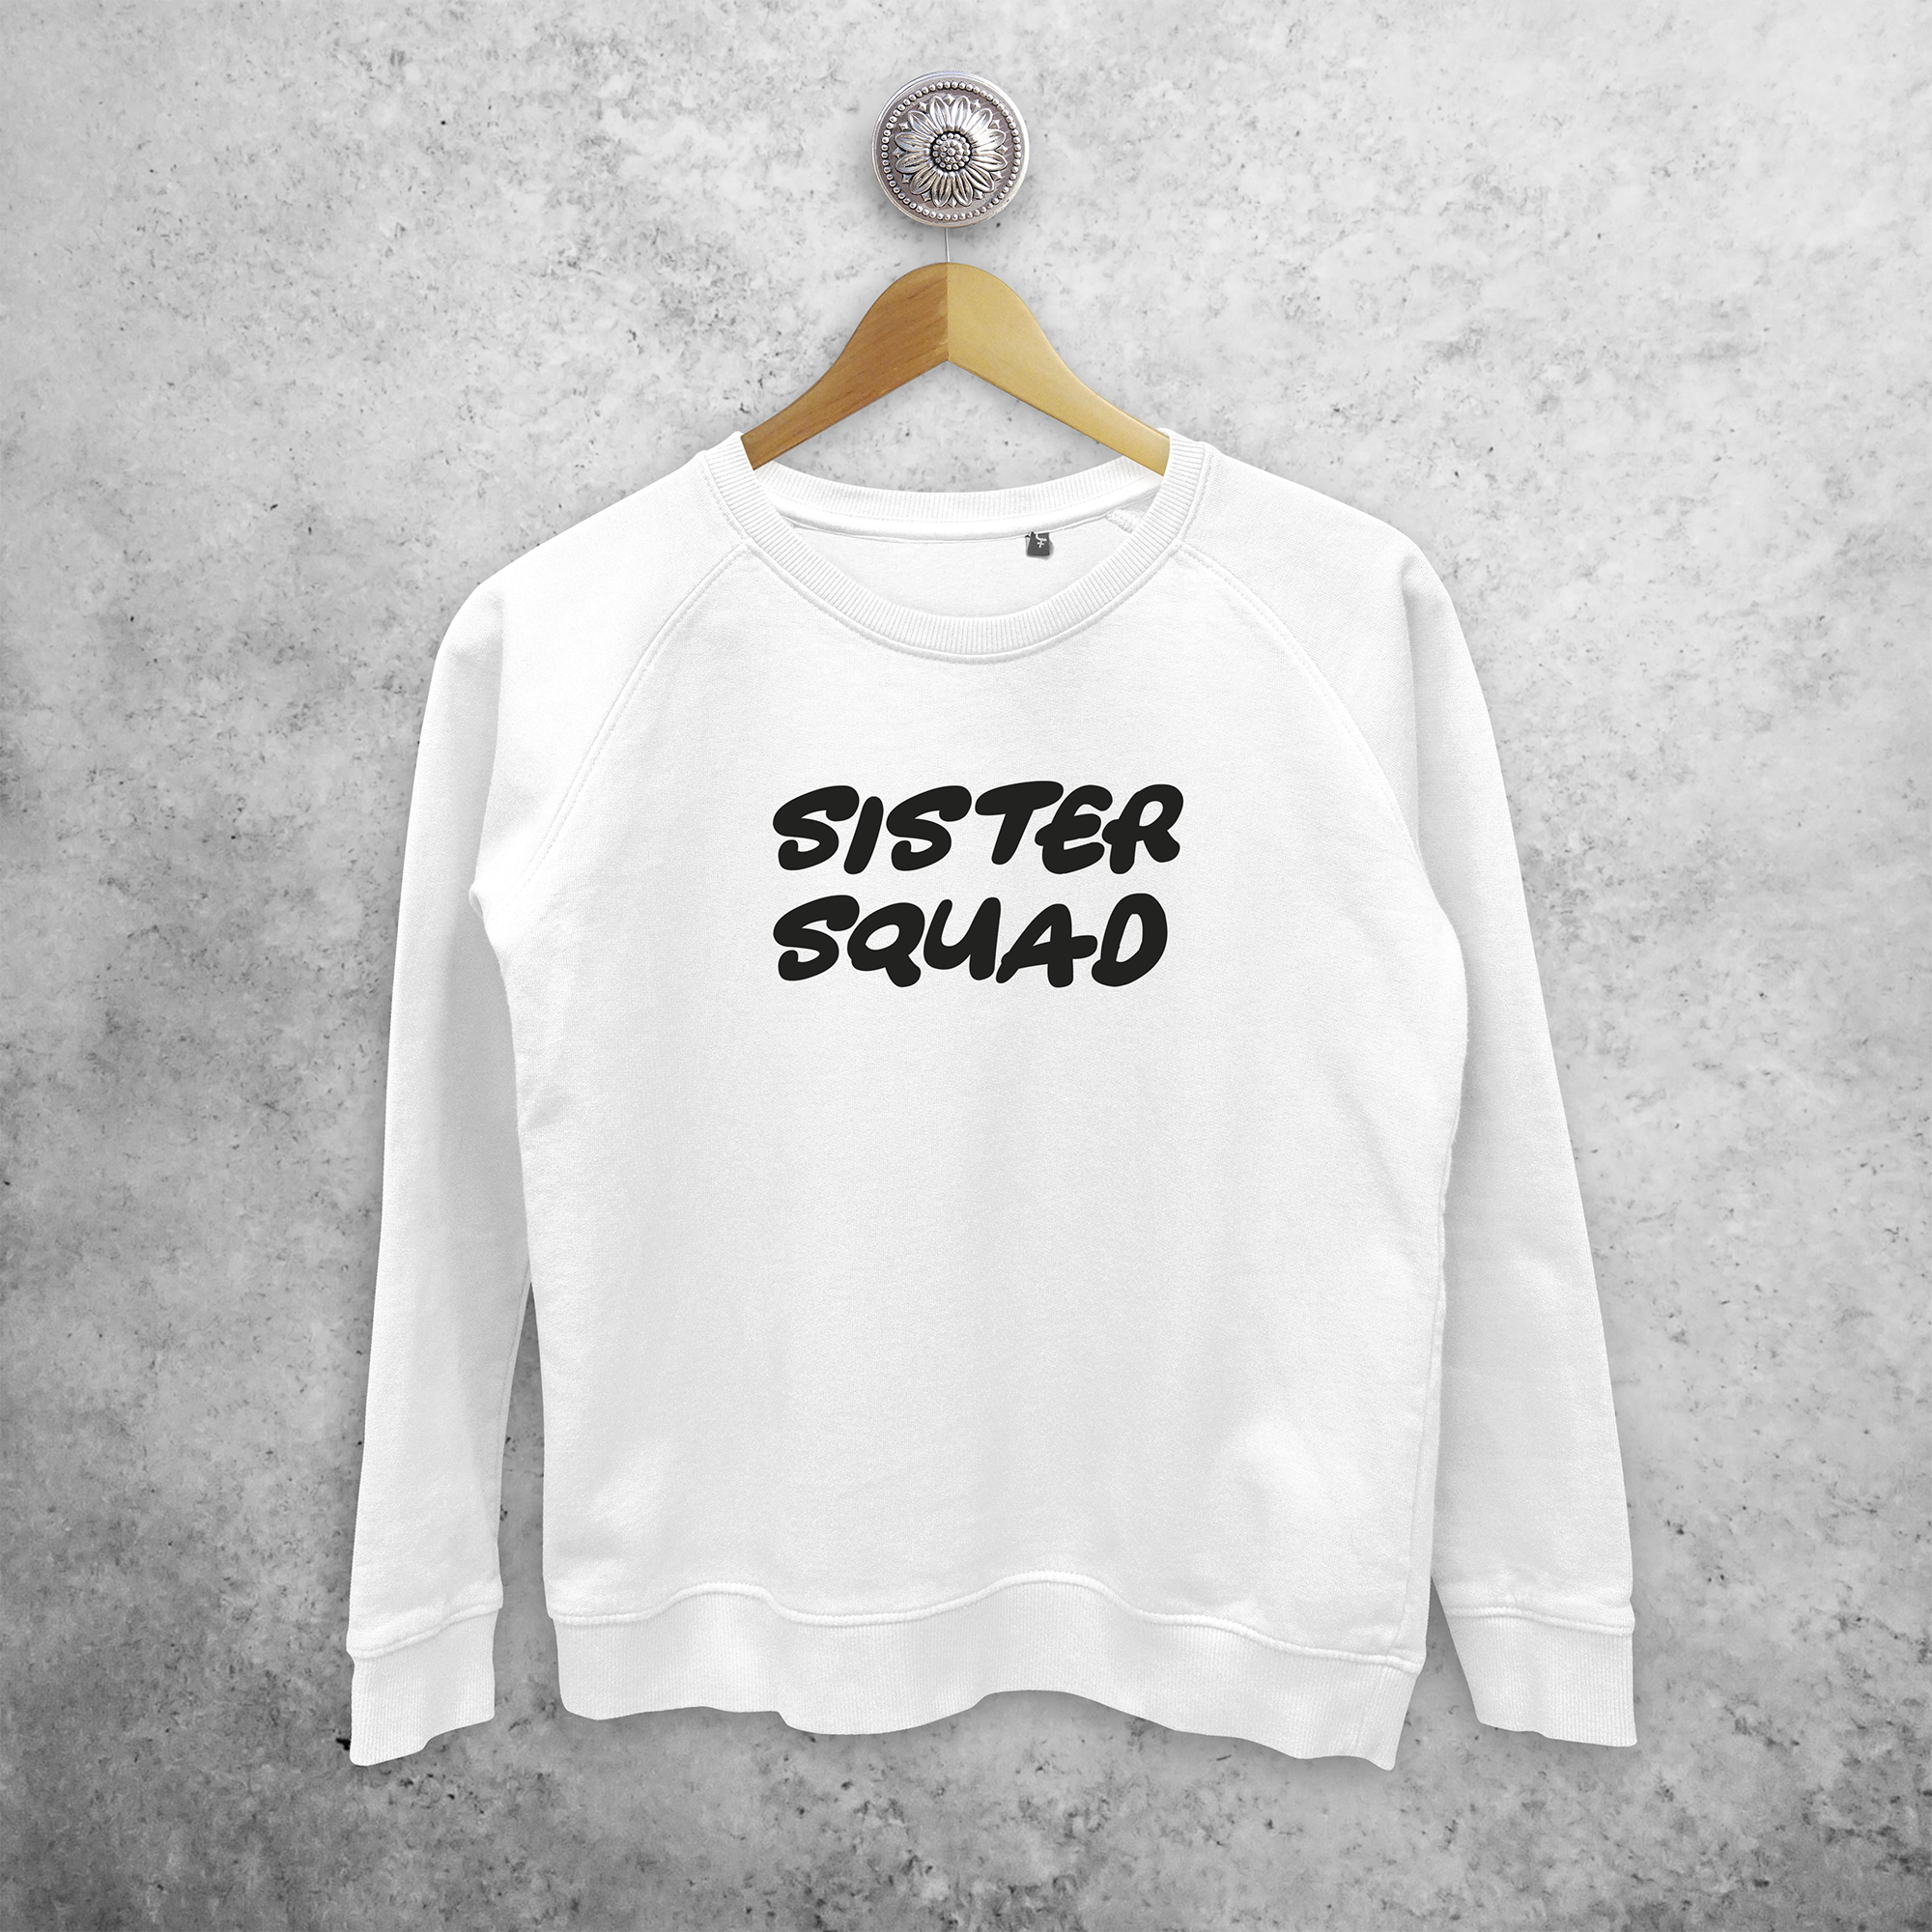 'Sister squad' trui